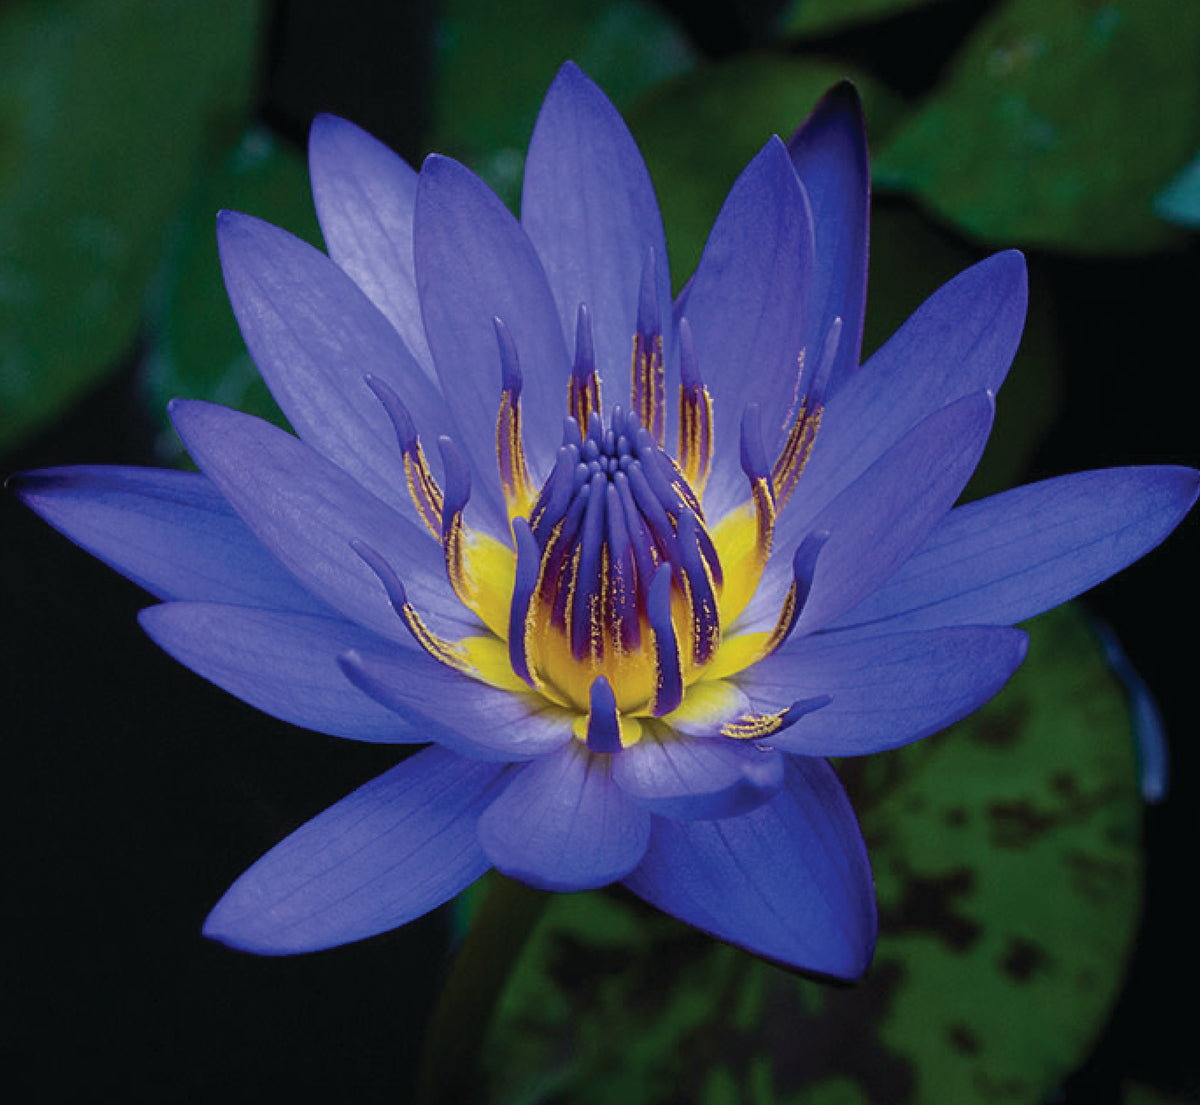 Blue Lotus Oil